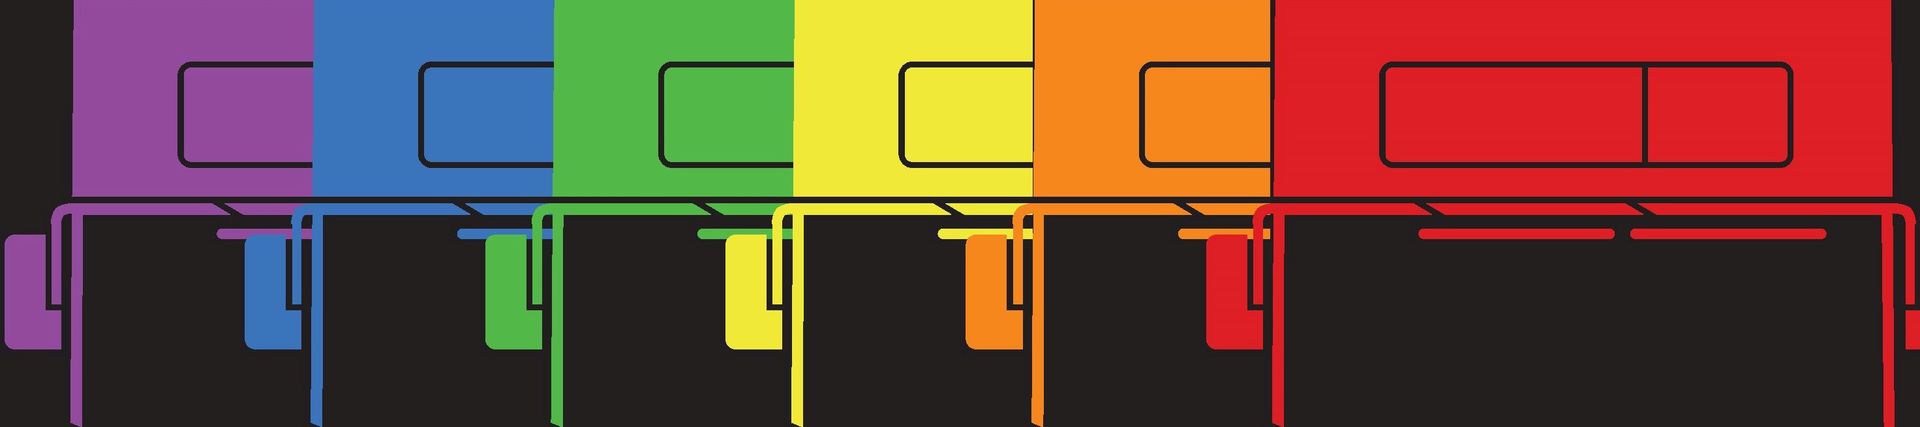 An illustration of a row of rainbow buses